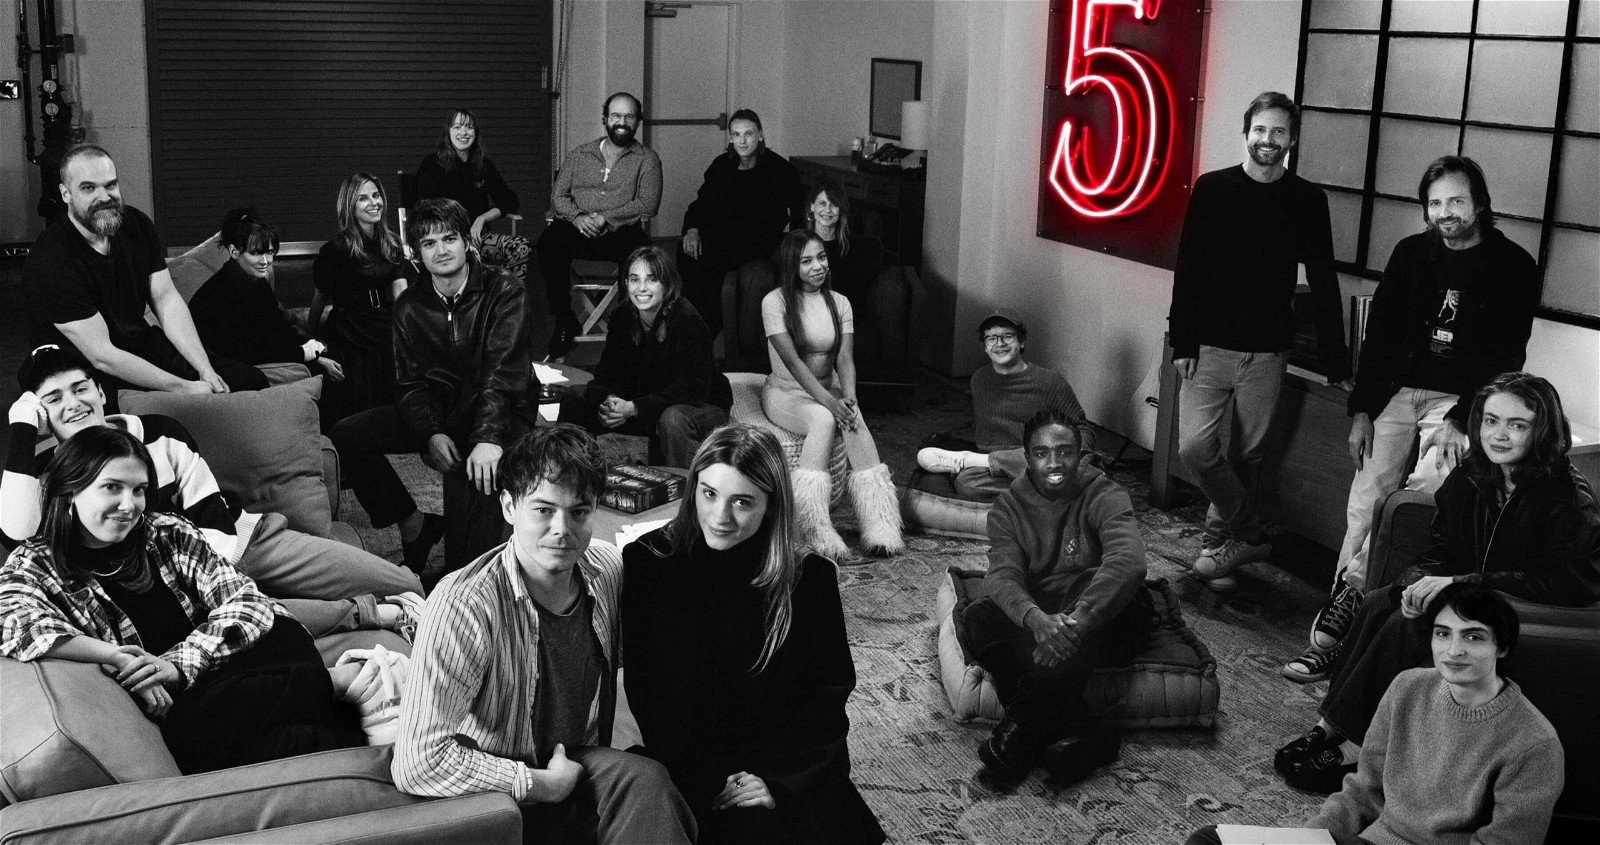 Stranger Things Season 5 production announcement photo (via @Stranger_Things on X)